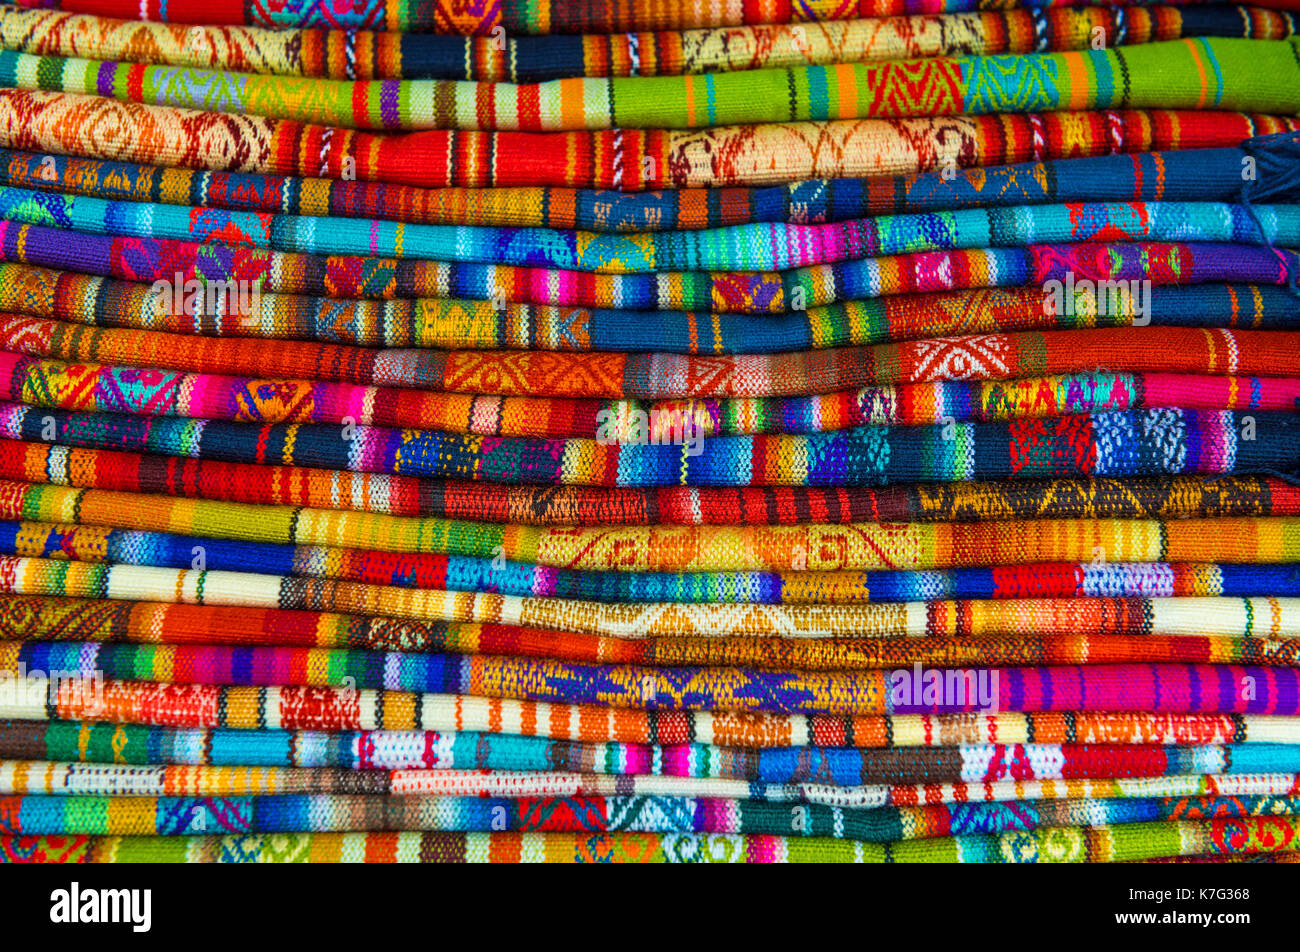 Textil andino peru fotografías e imágenes de alta resolución - Alamy